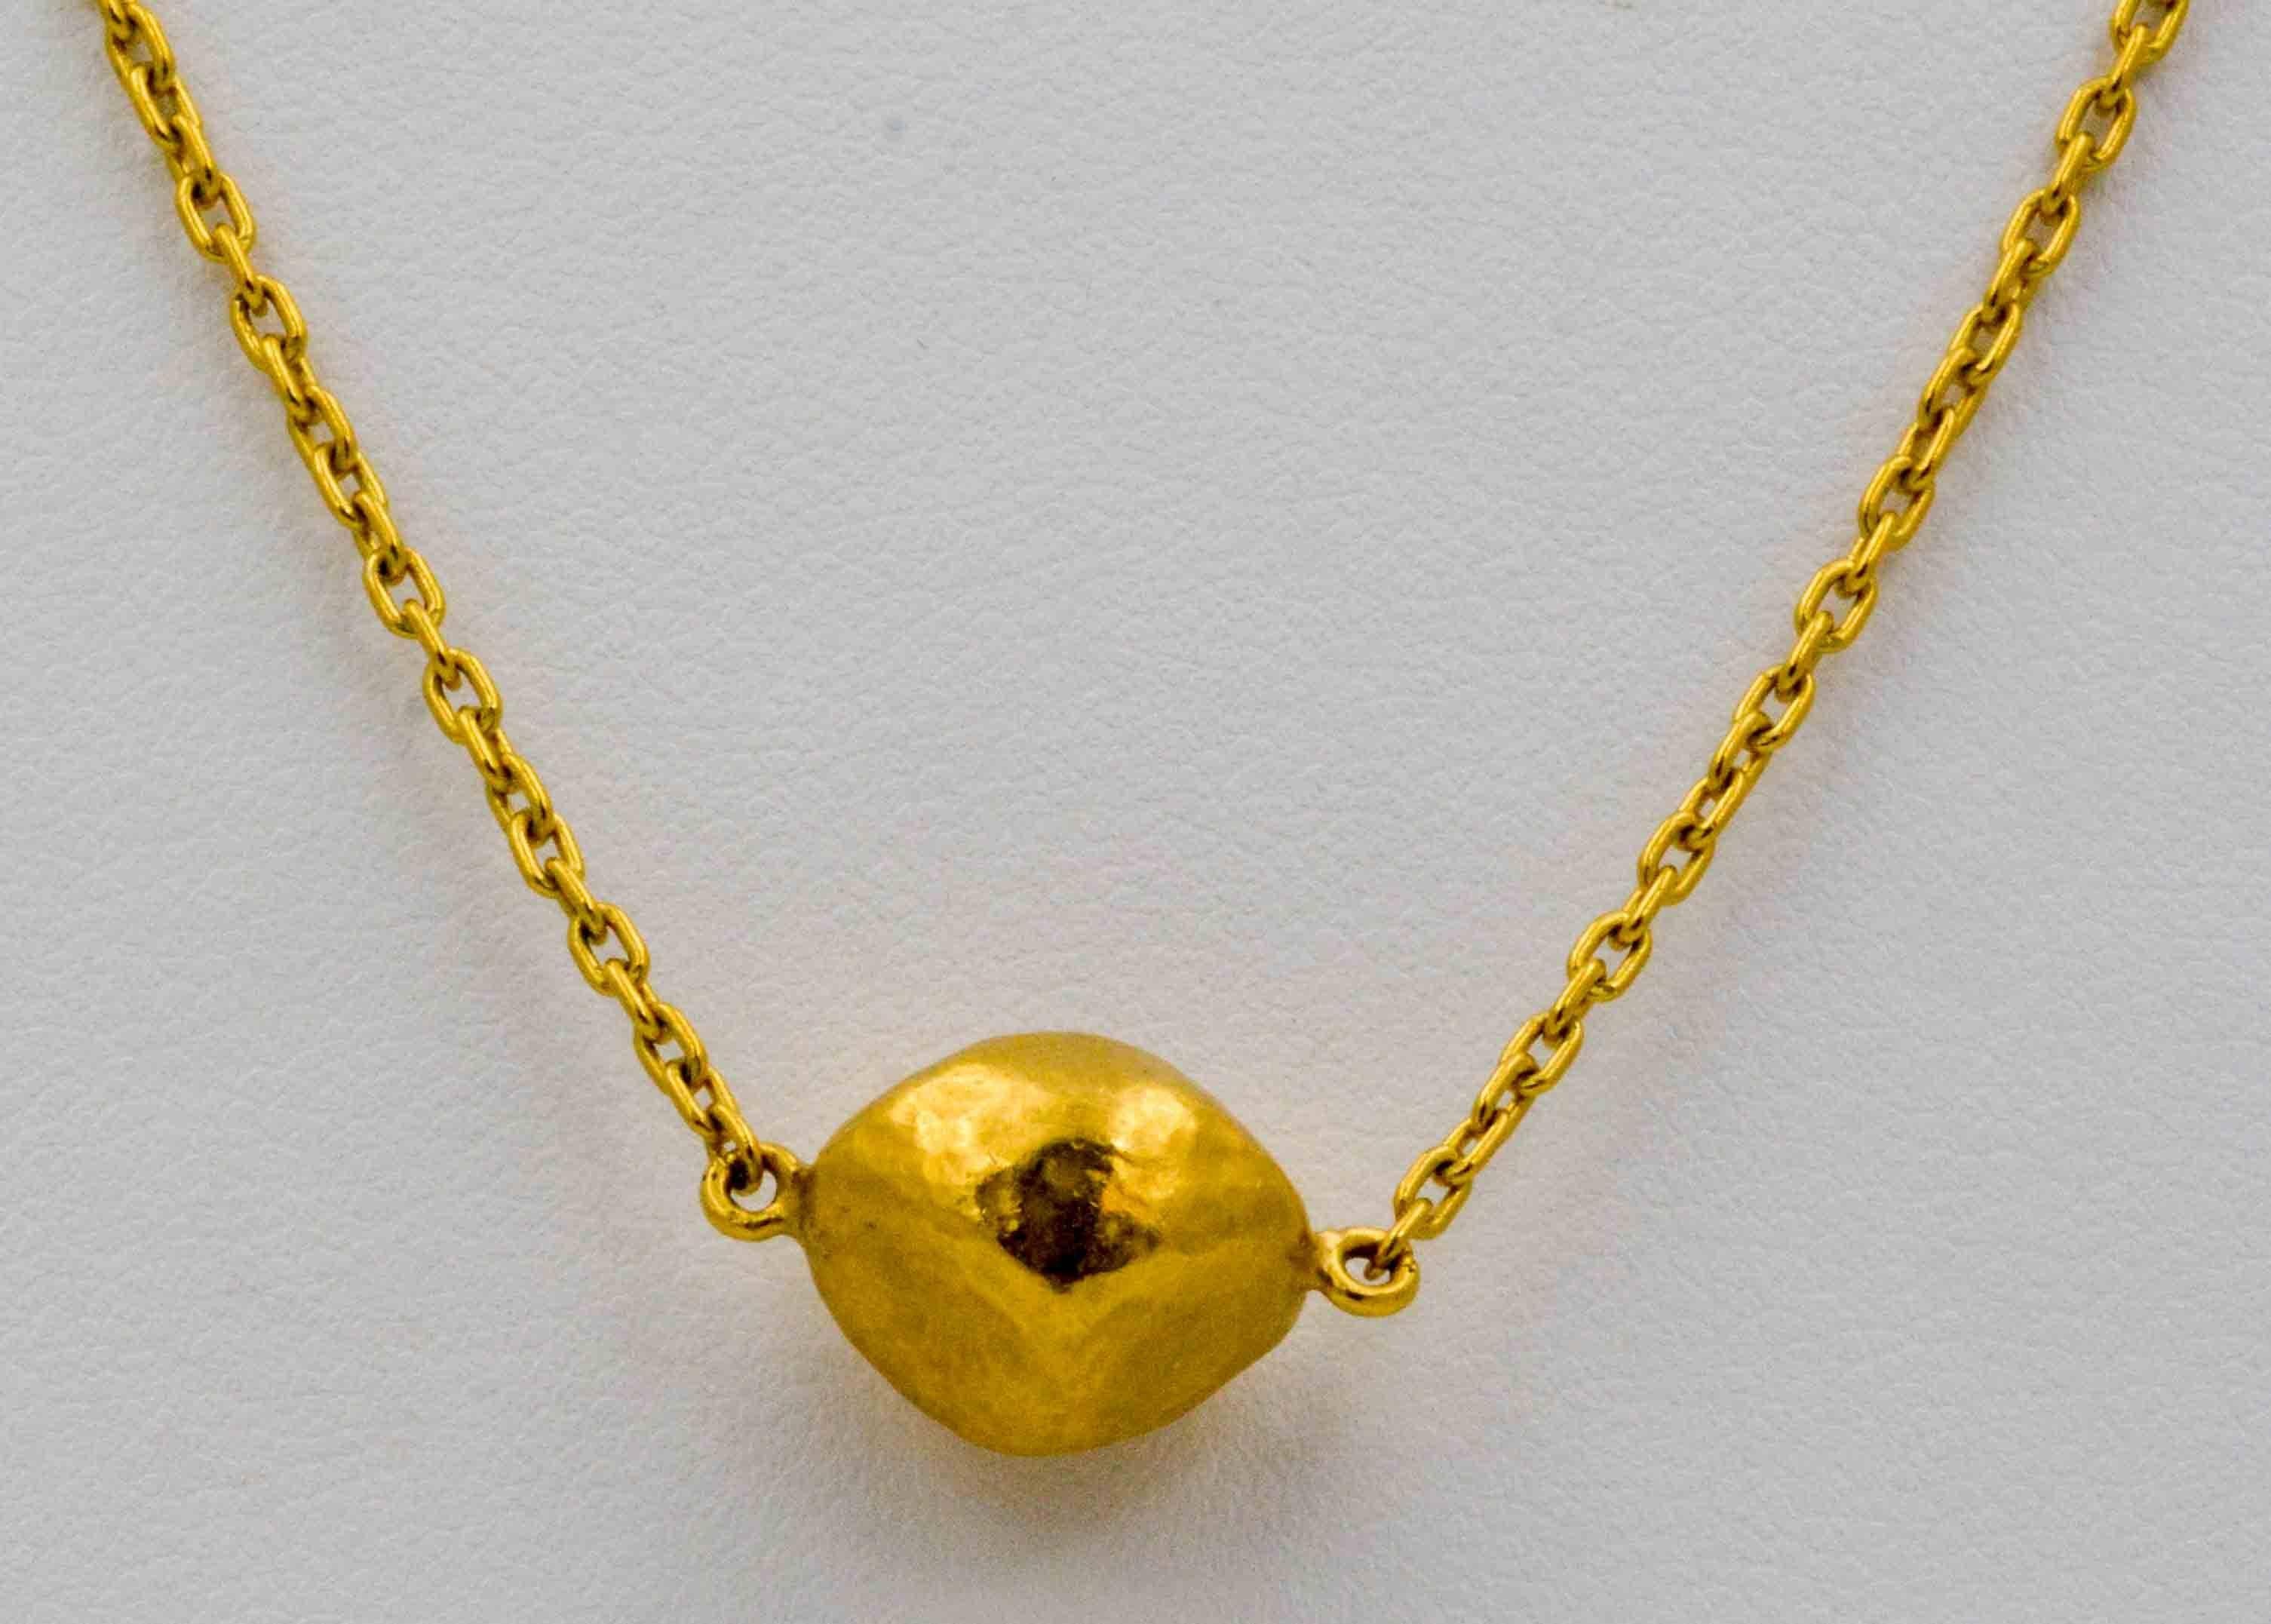 24 karat gold necklace